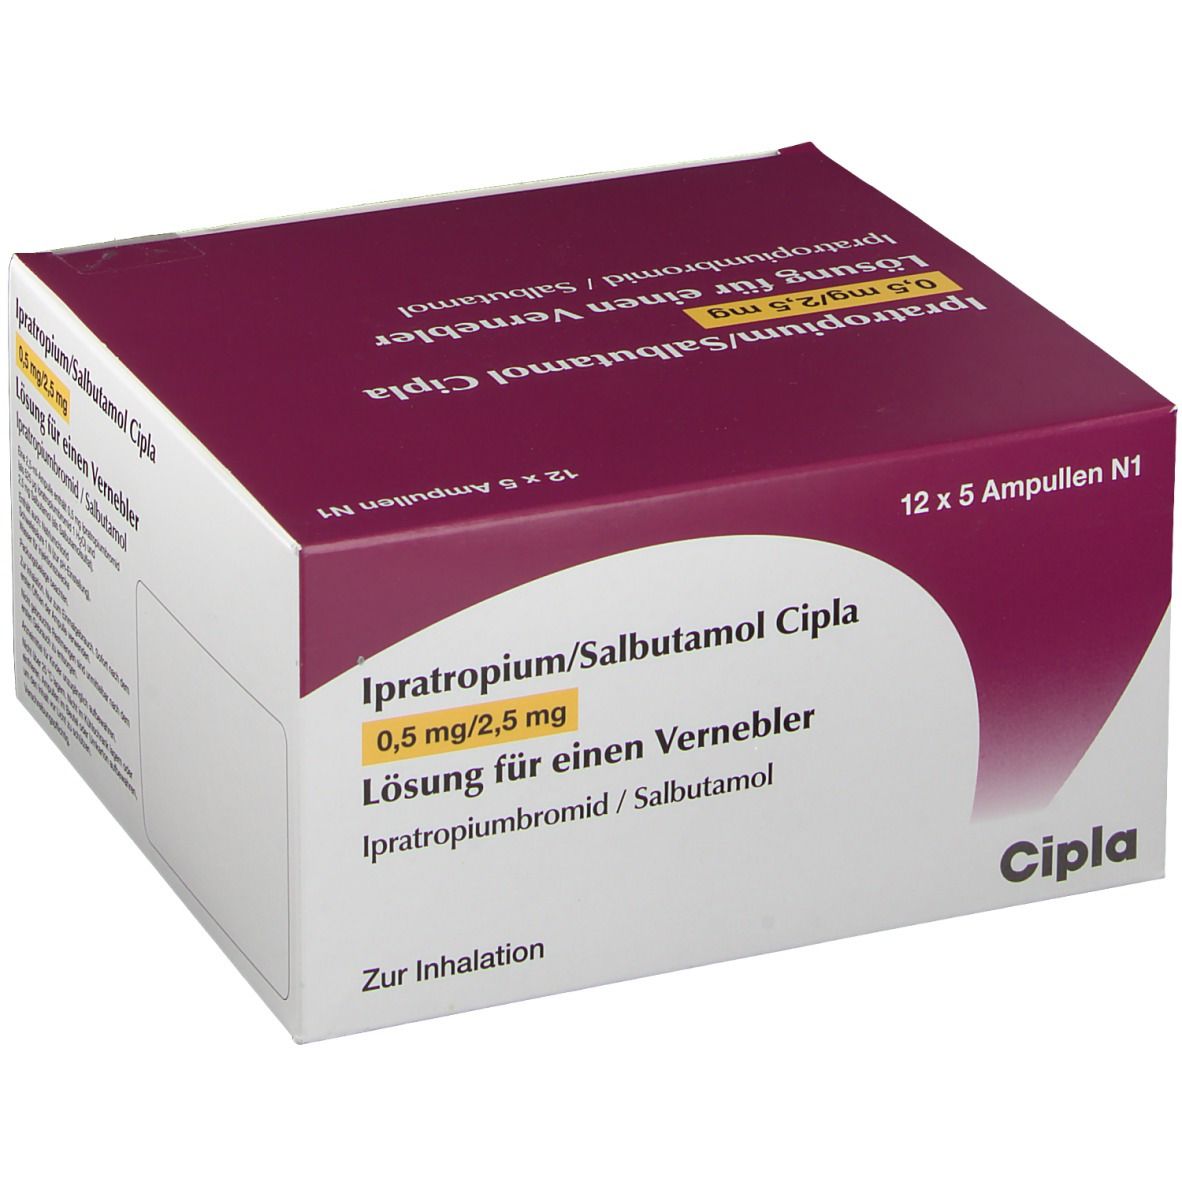 Ipratropium/Salbutamol Cipla 0,5 mg/2,5 mg